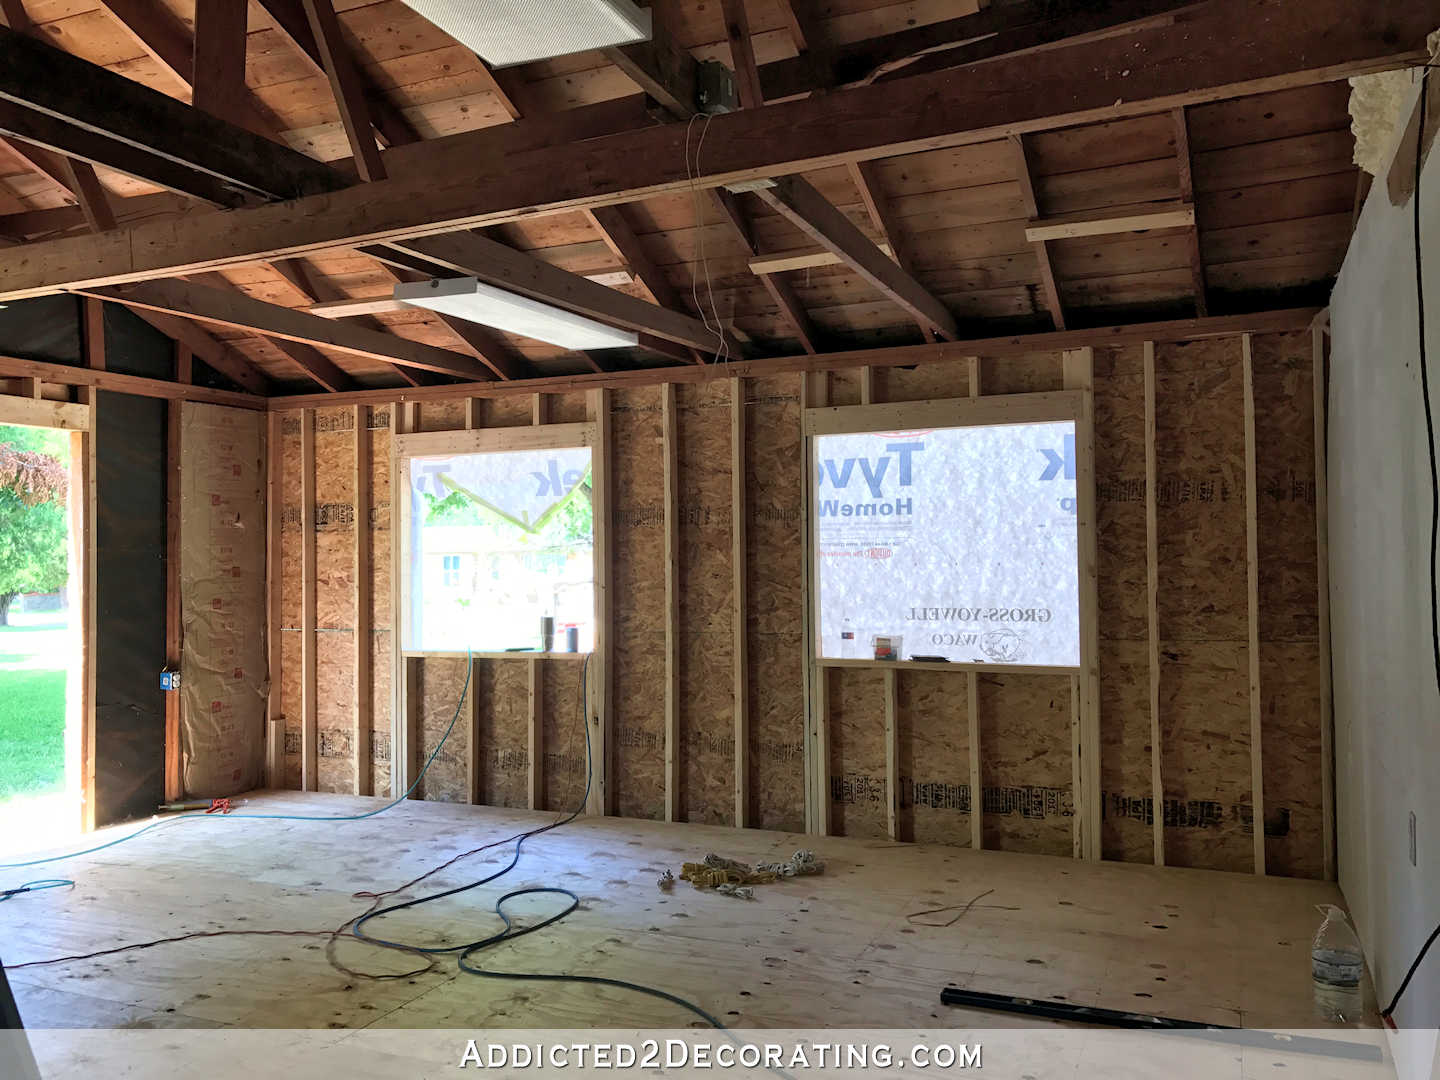 7-10-17 - 5 - garage conversion to studio progress - front wall framed